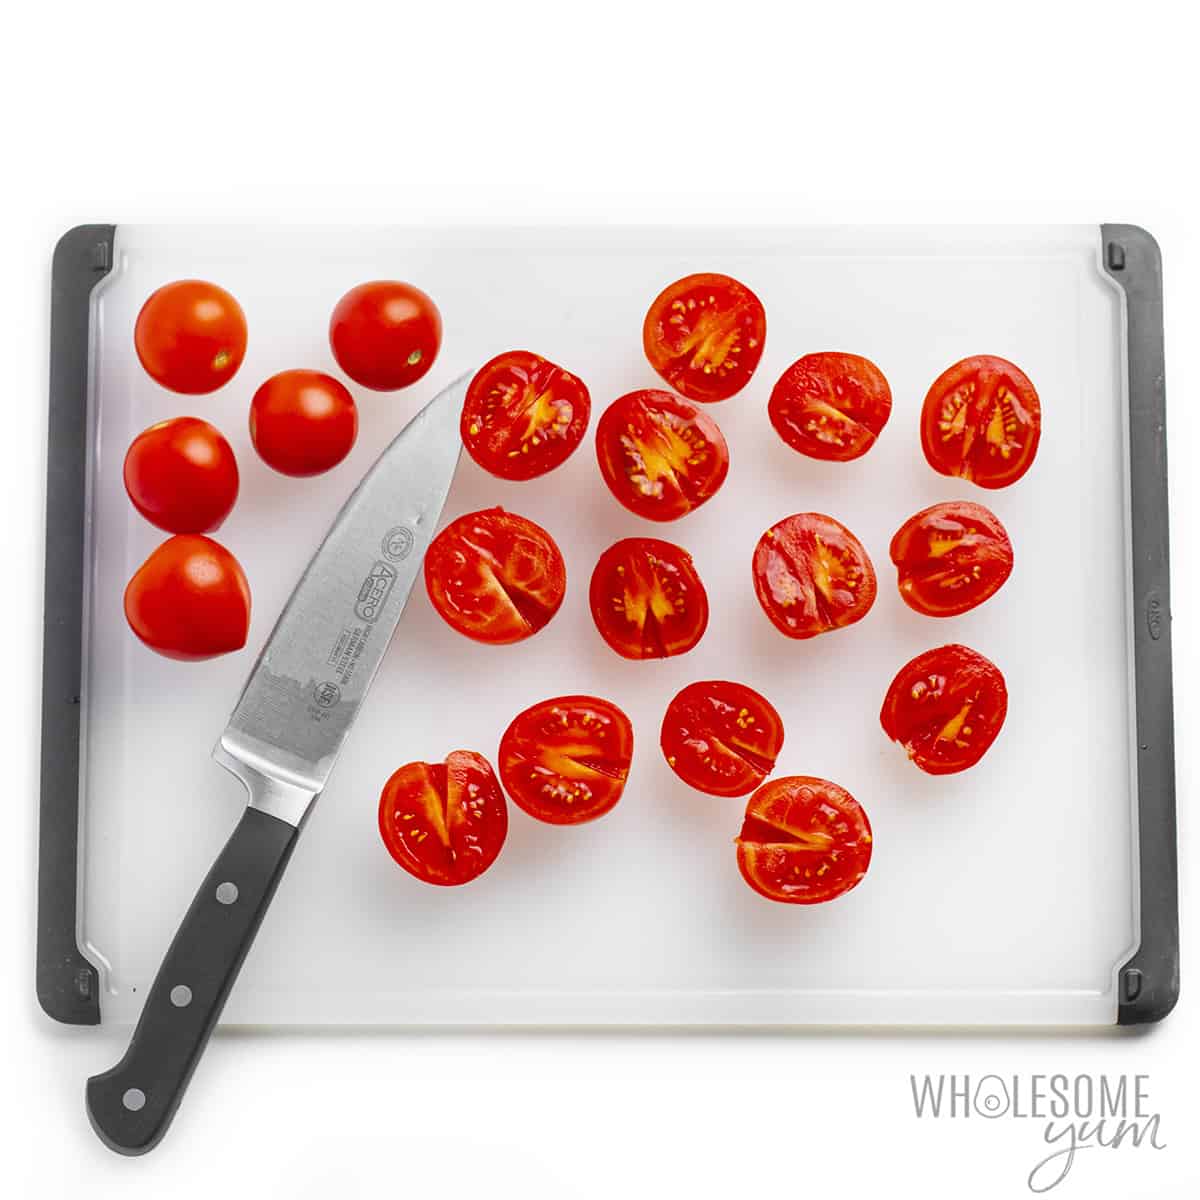 Tomatoes sliced in half.